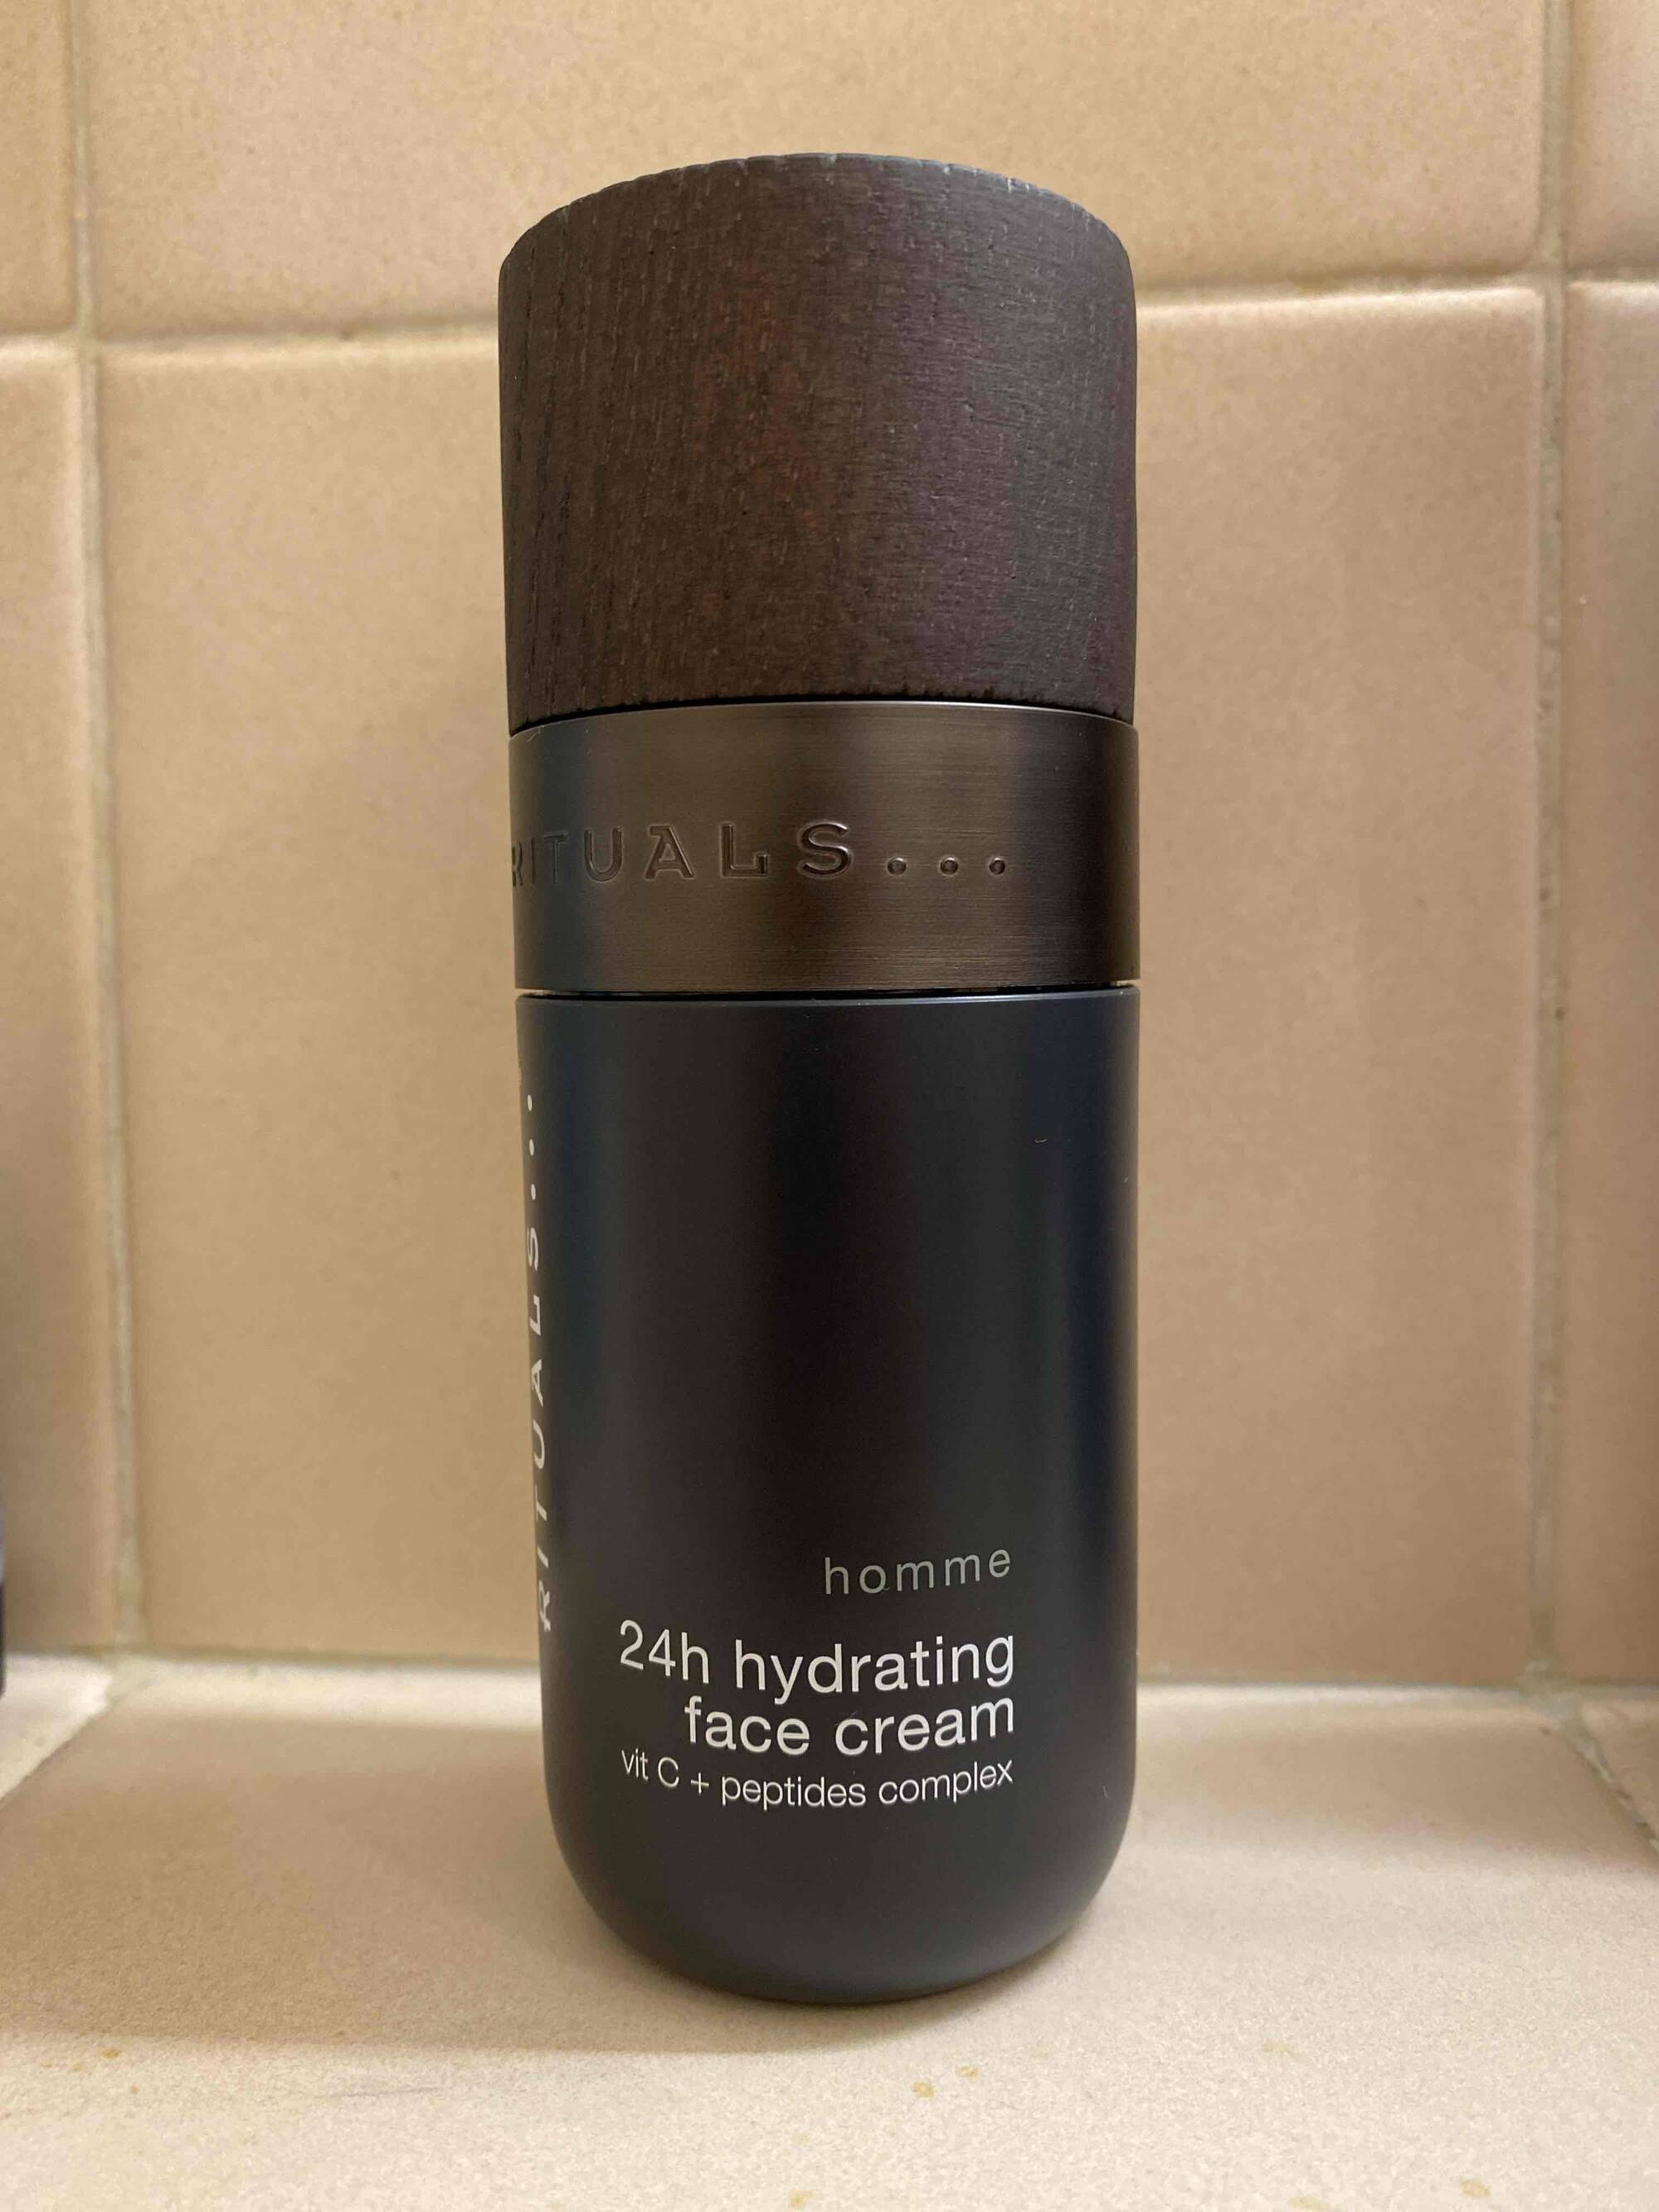 RITUALS - 24h hydrating face cream